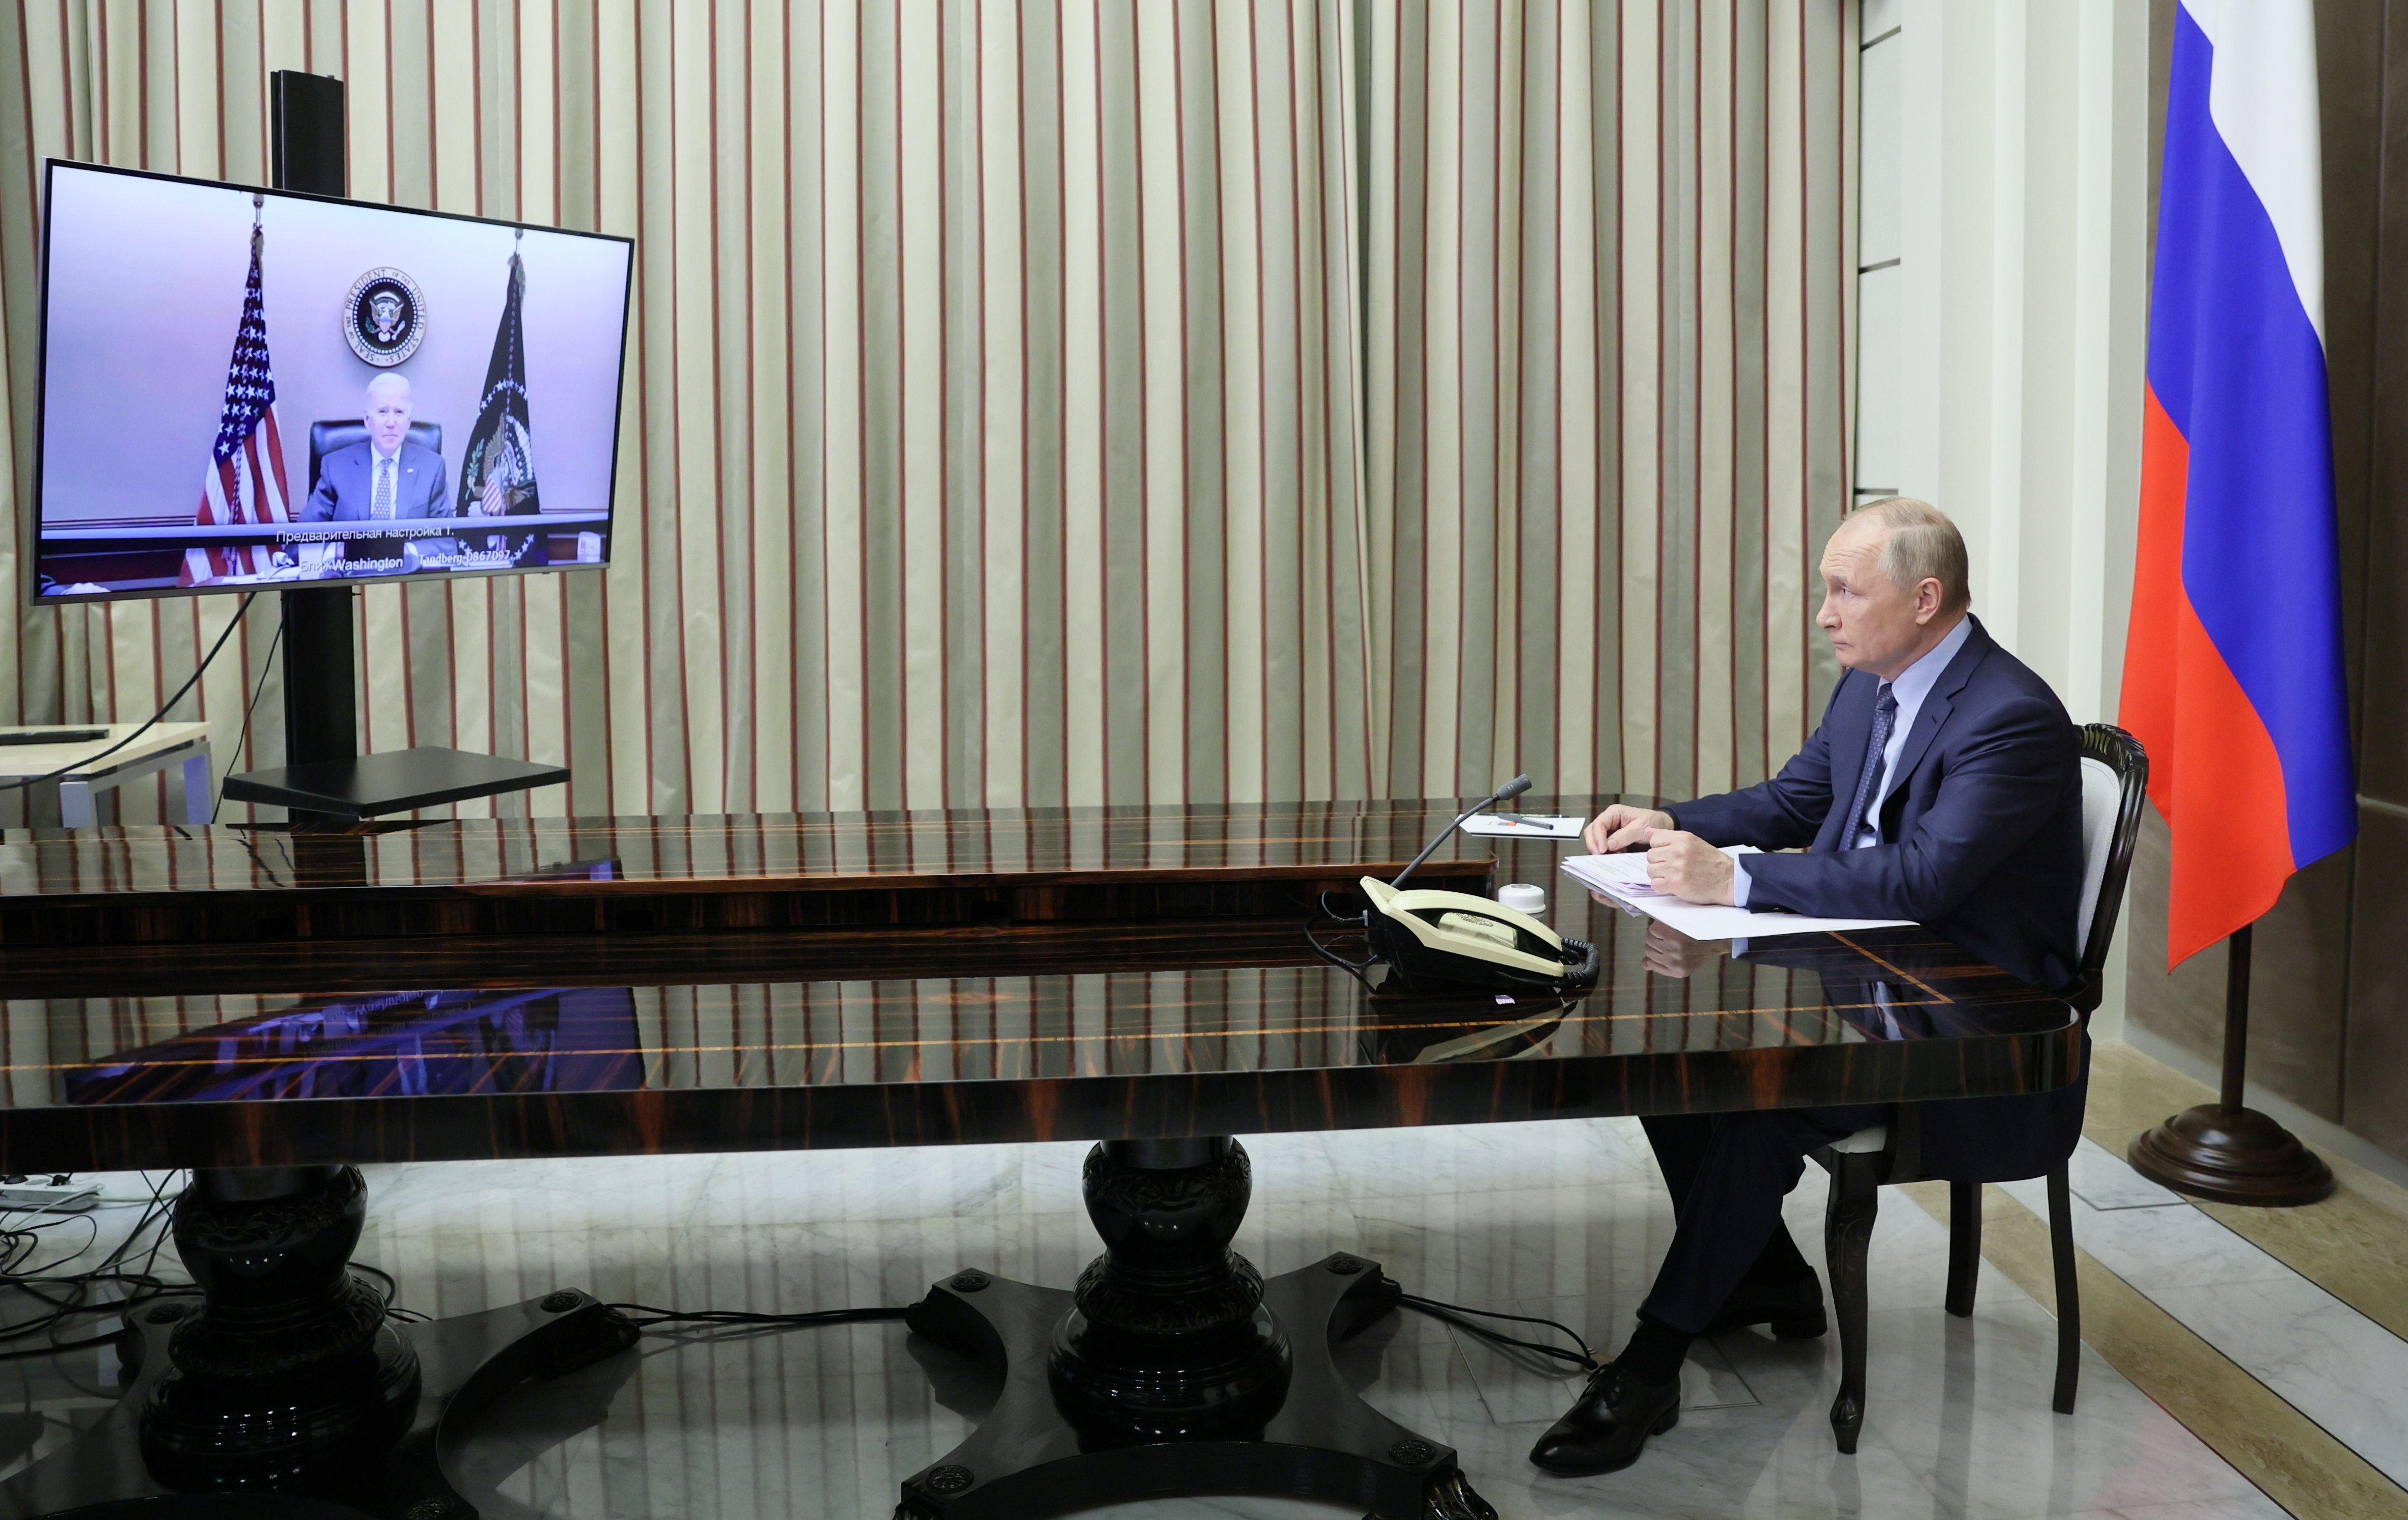 Russian President Vladimir Putin holds talks with U.S. President Joe Biden via a video link in Sochi, Russia December 7, 2021. Sputnik/Mikhail Metzel/Pool via REUTERS